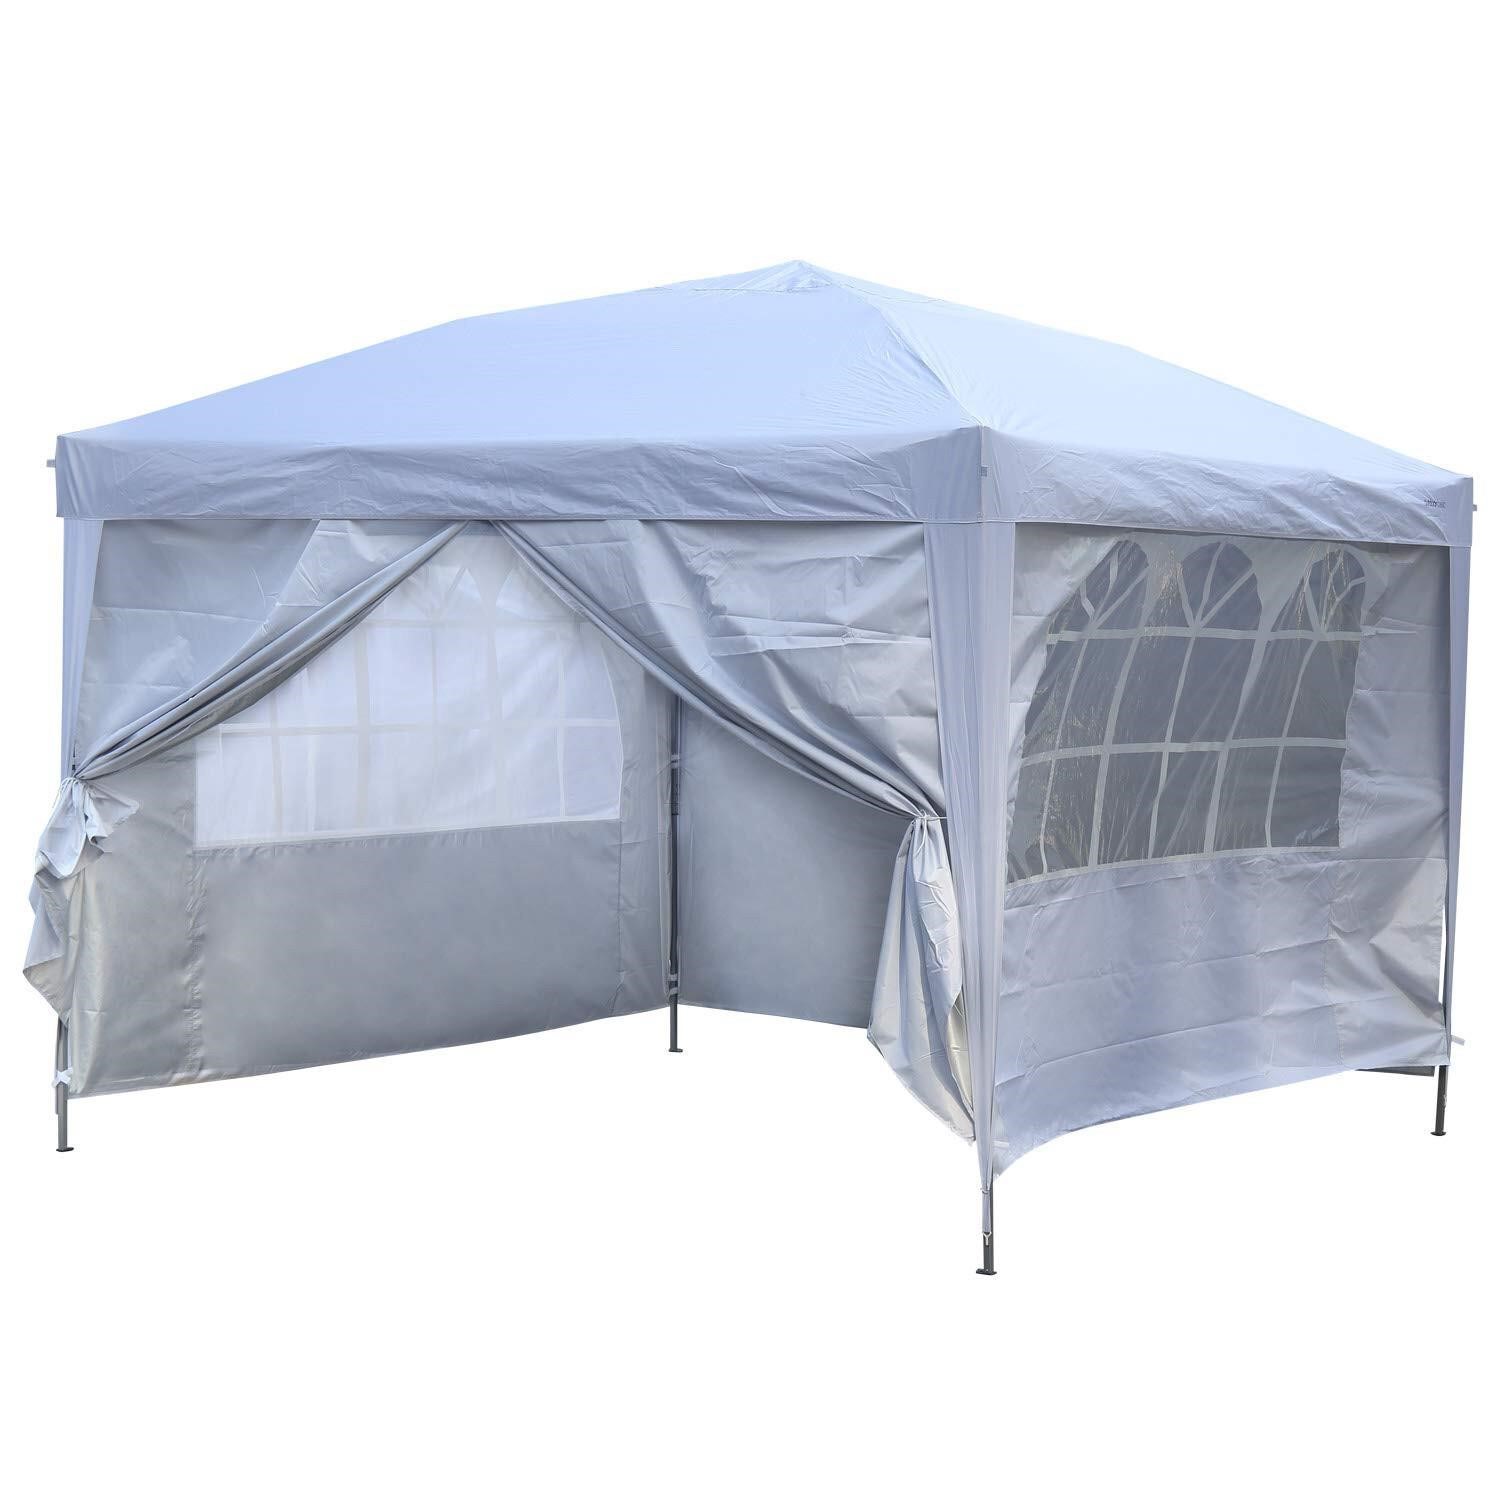 10x10 Pop up Canopy Party Tent Instant Gazebos wit